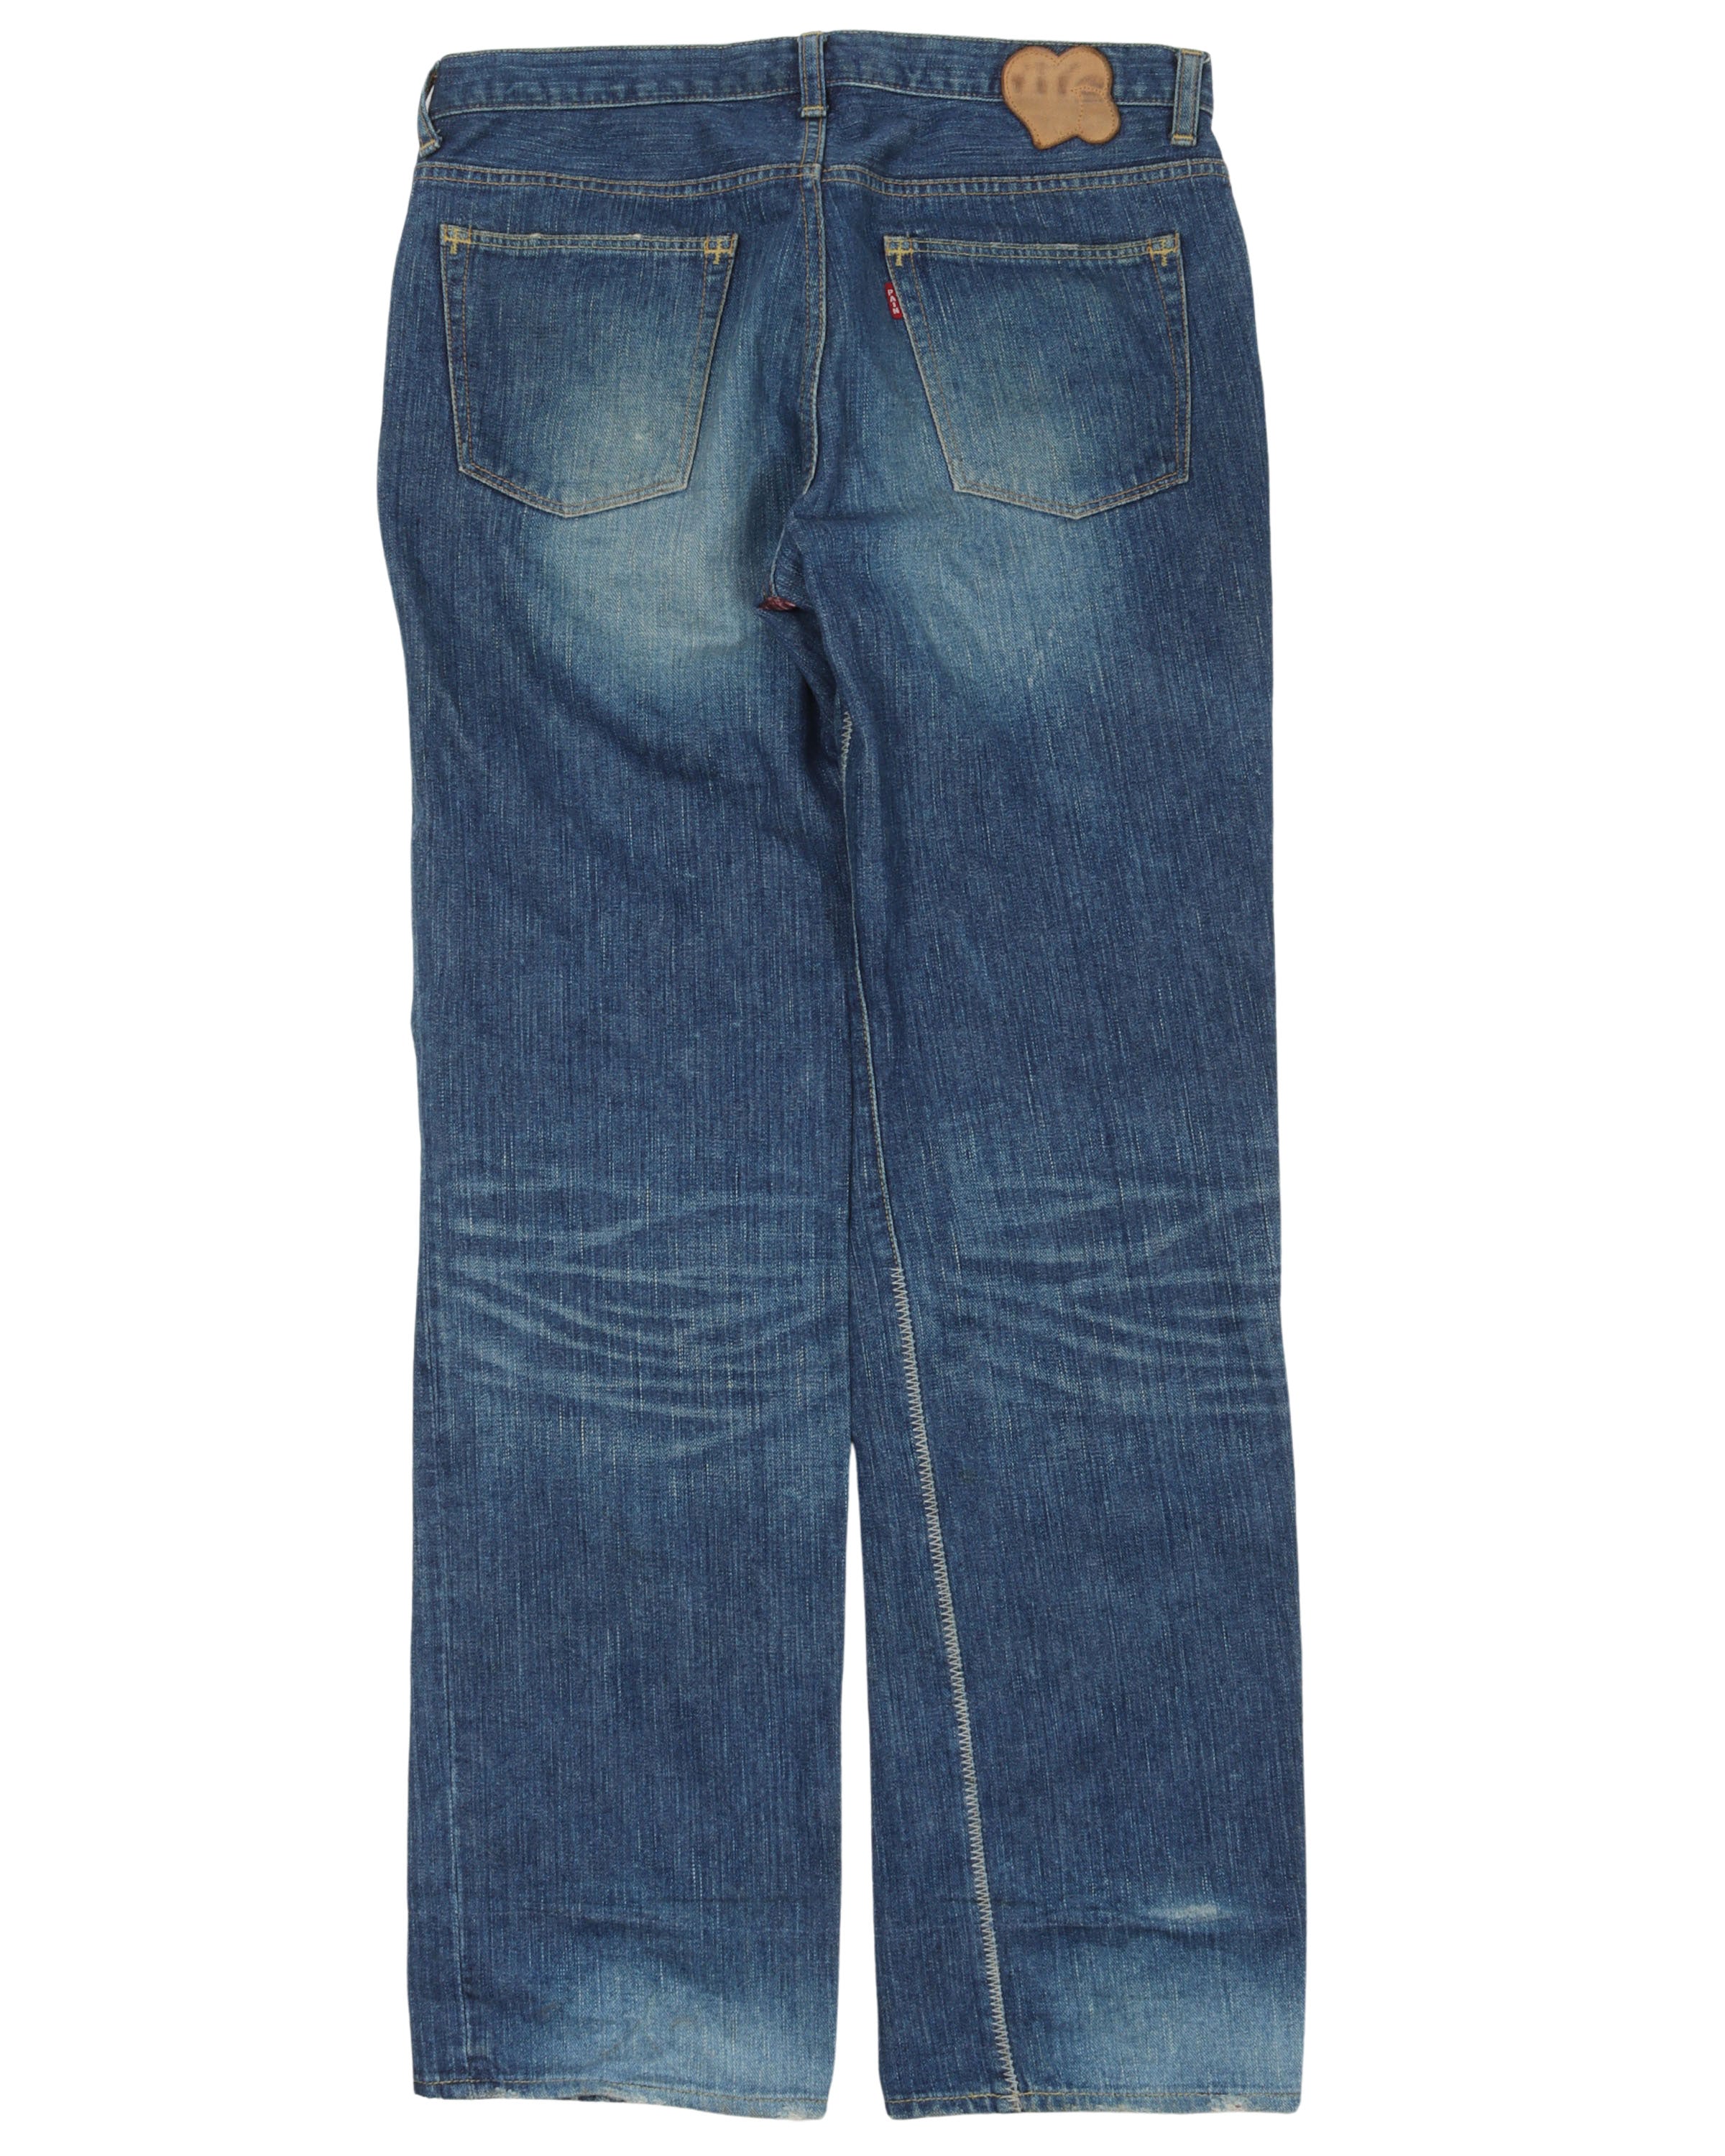 AW03 Velvet Patch Jeans